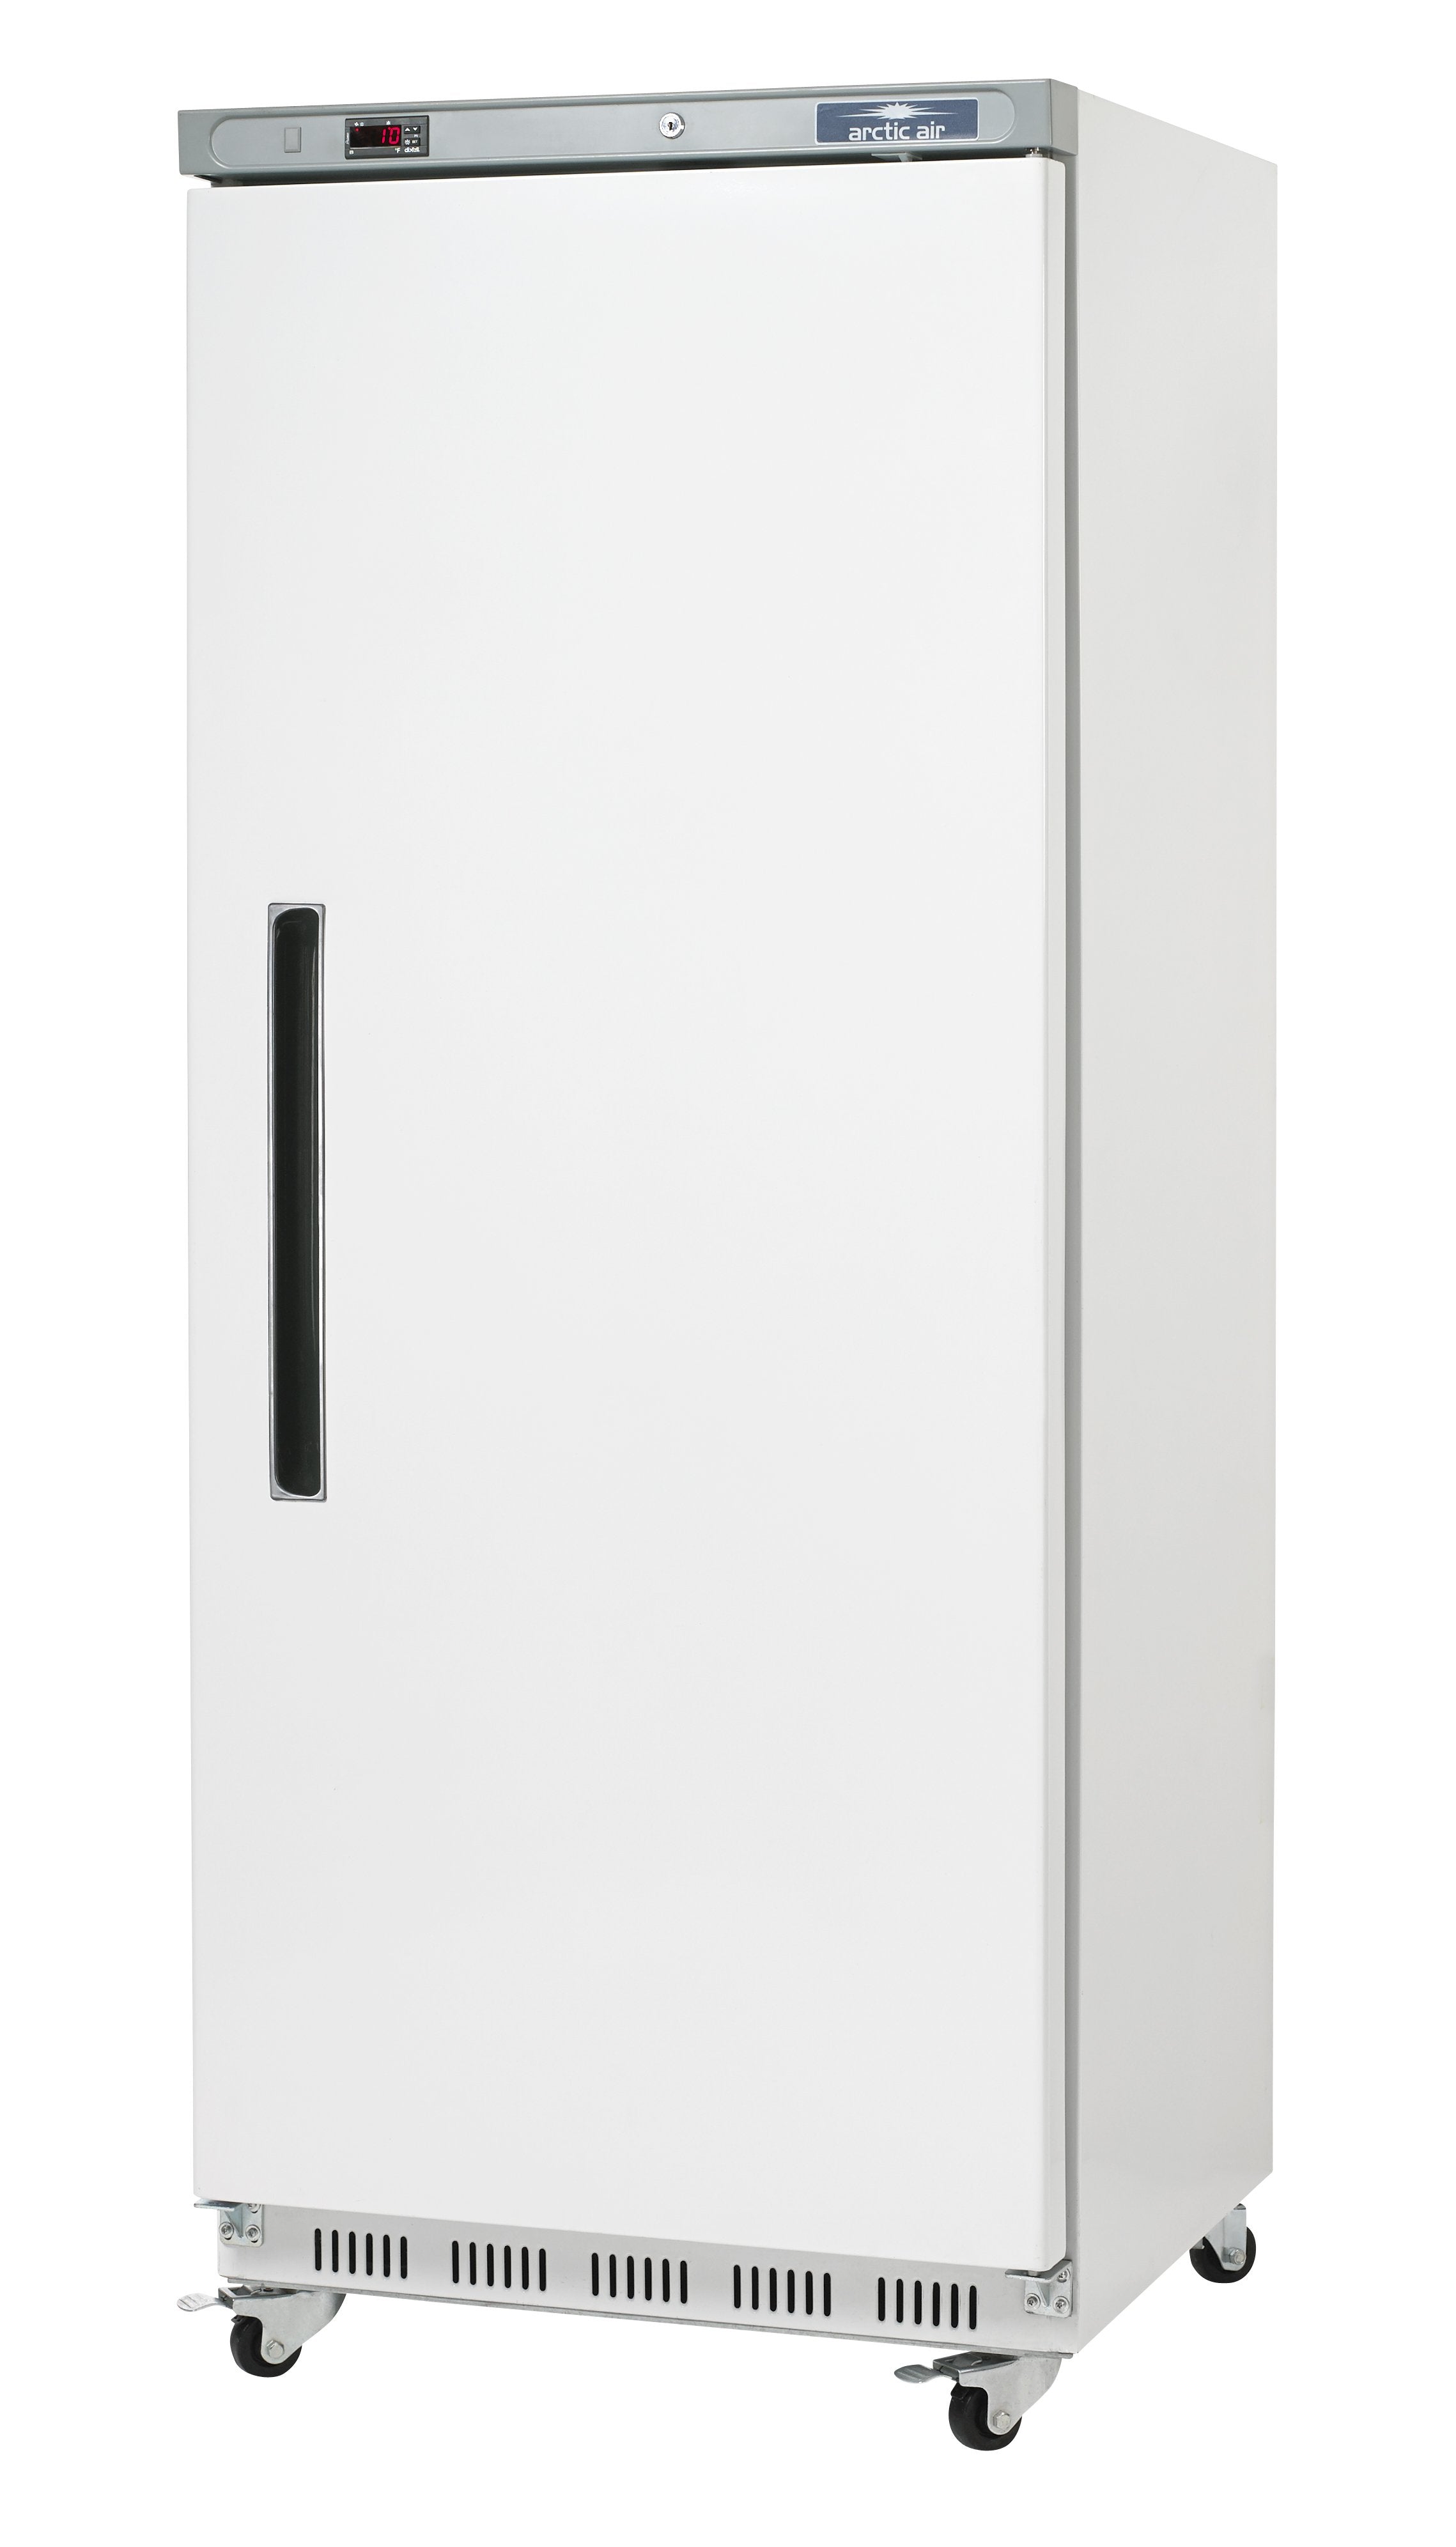 Arctic Air AWF25 Single Door Reach-In Refrigerator